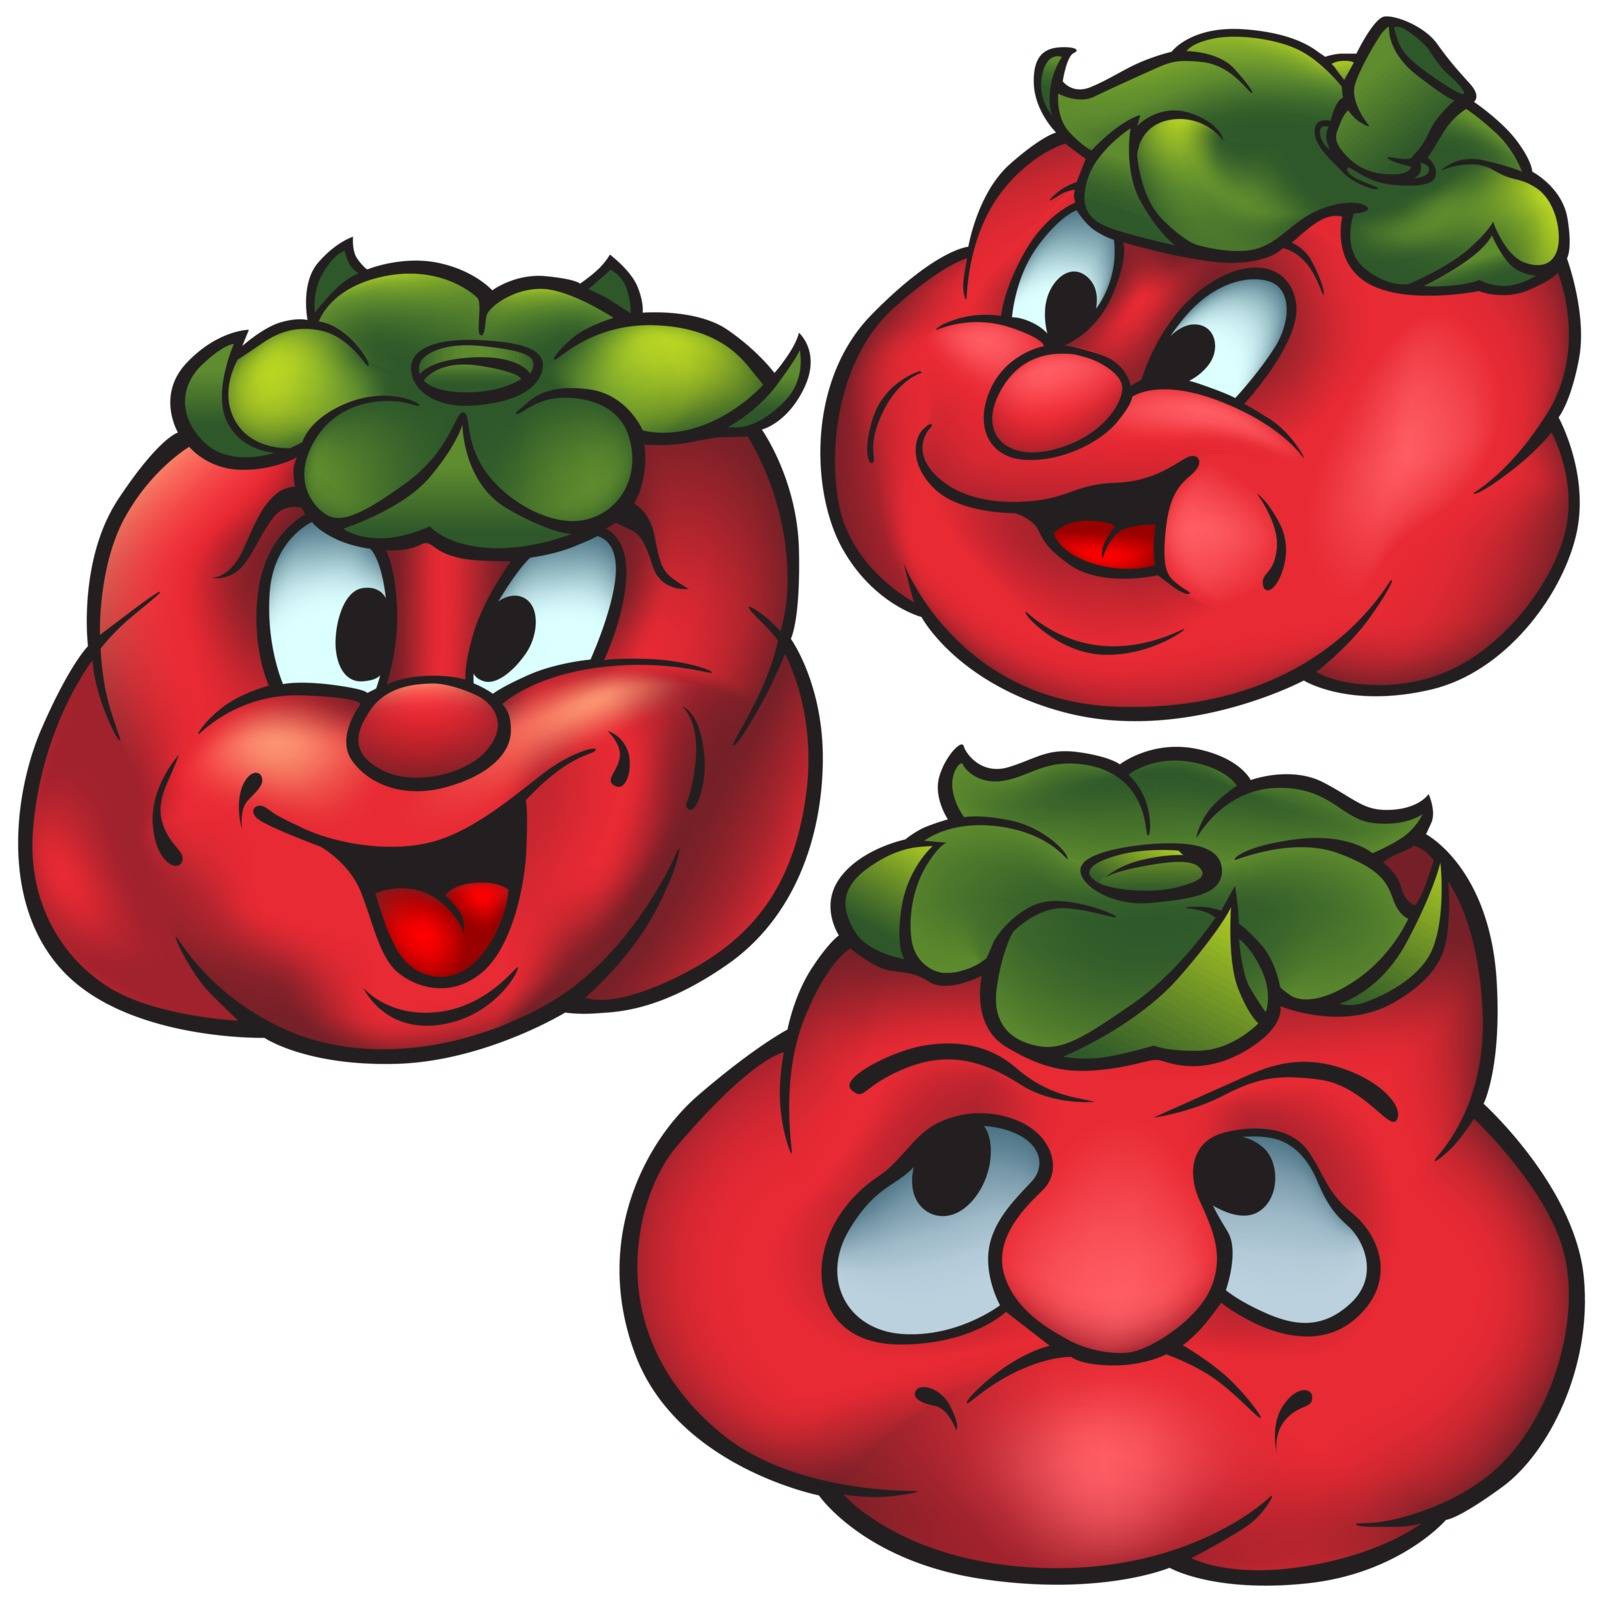 Three Tomatoes by illustratorCZ